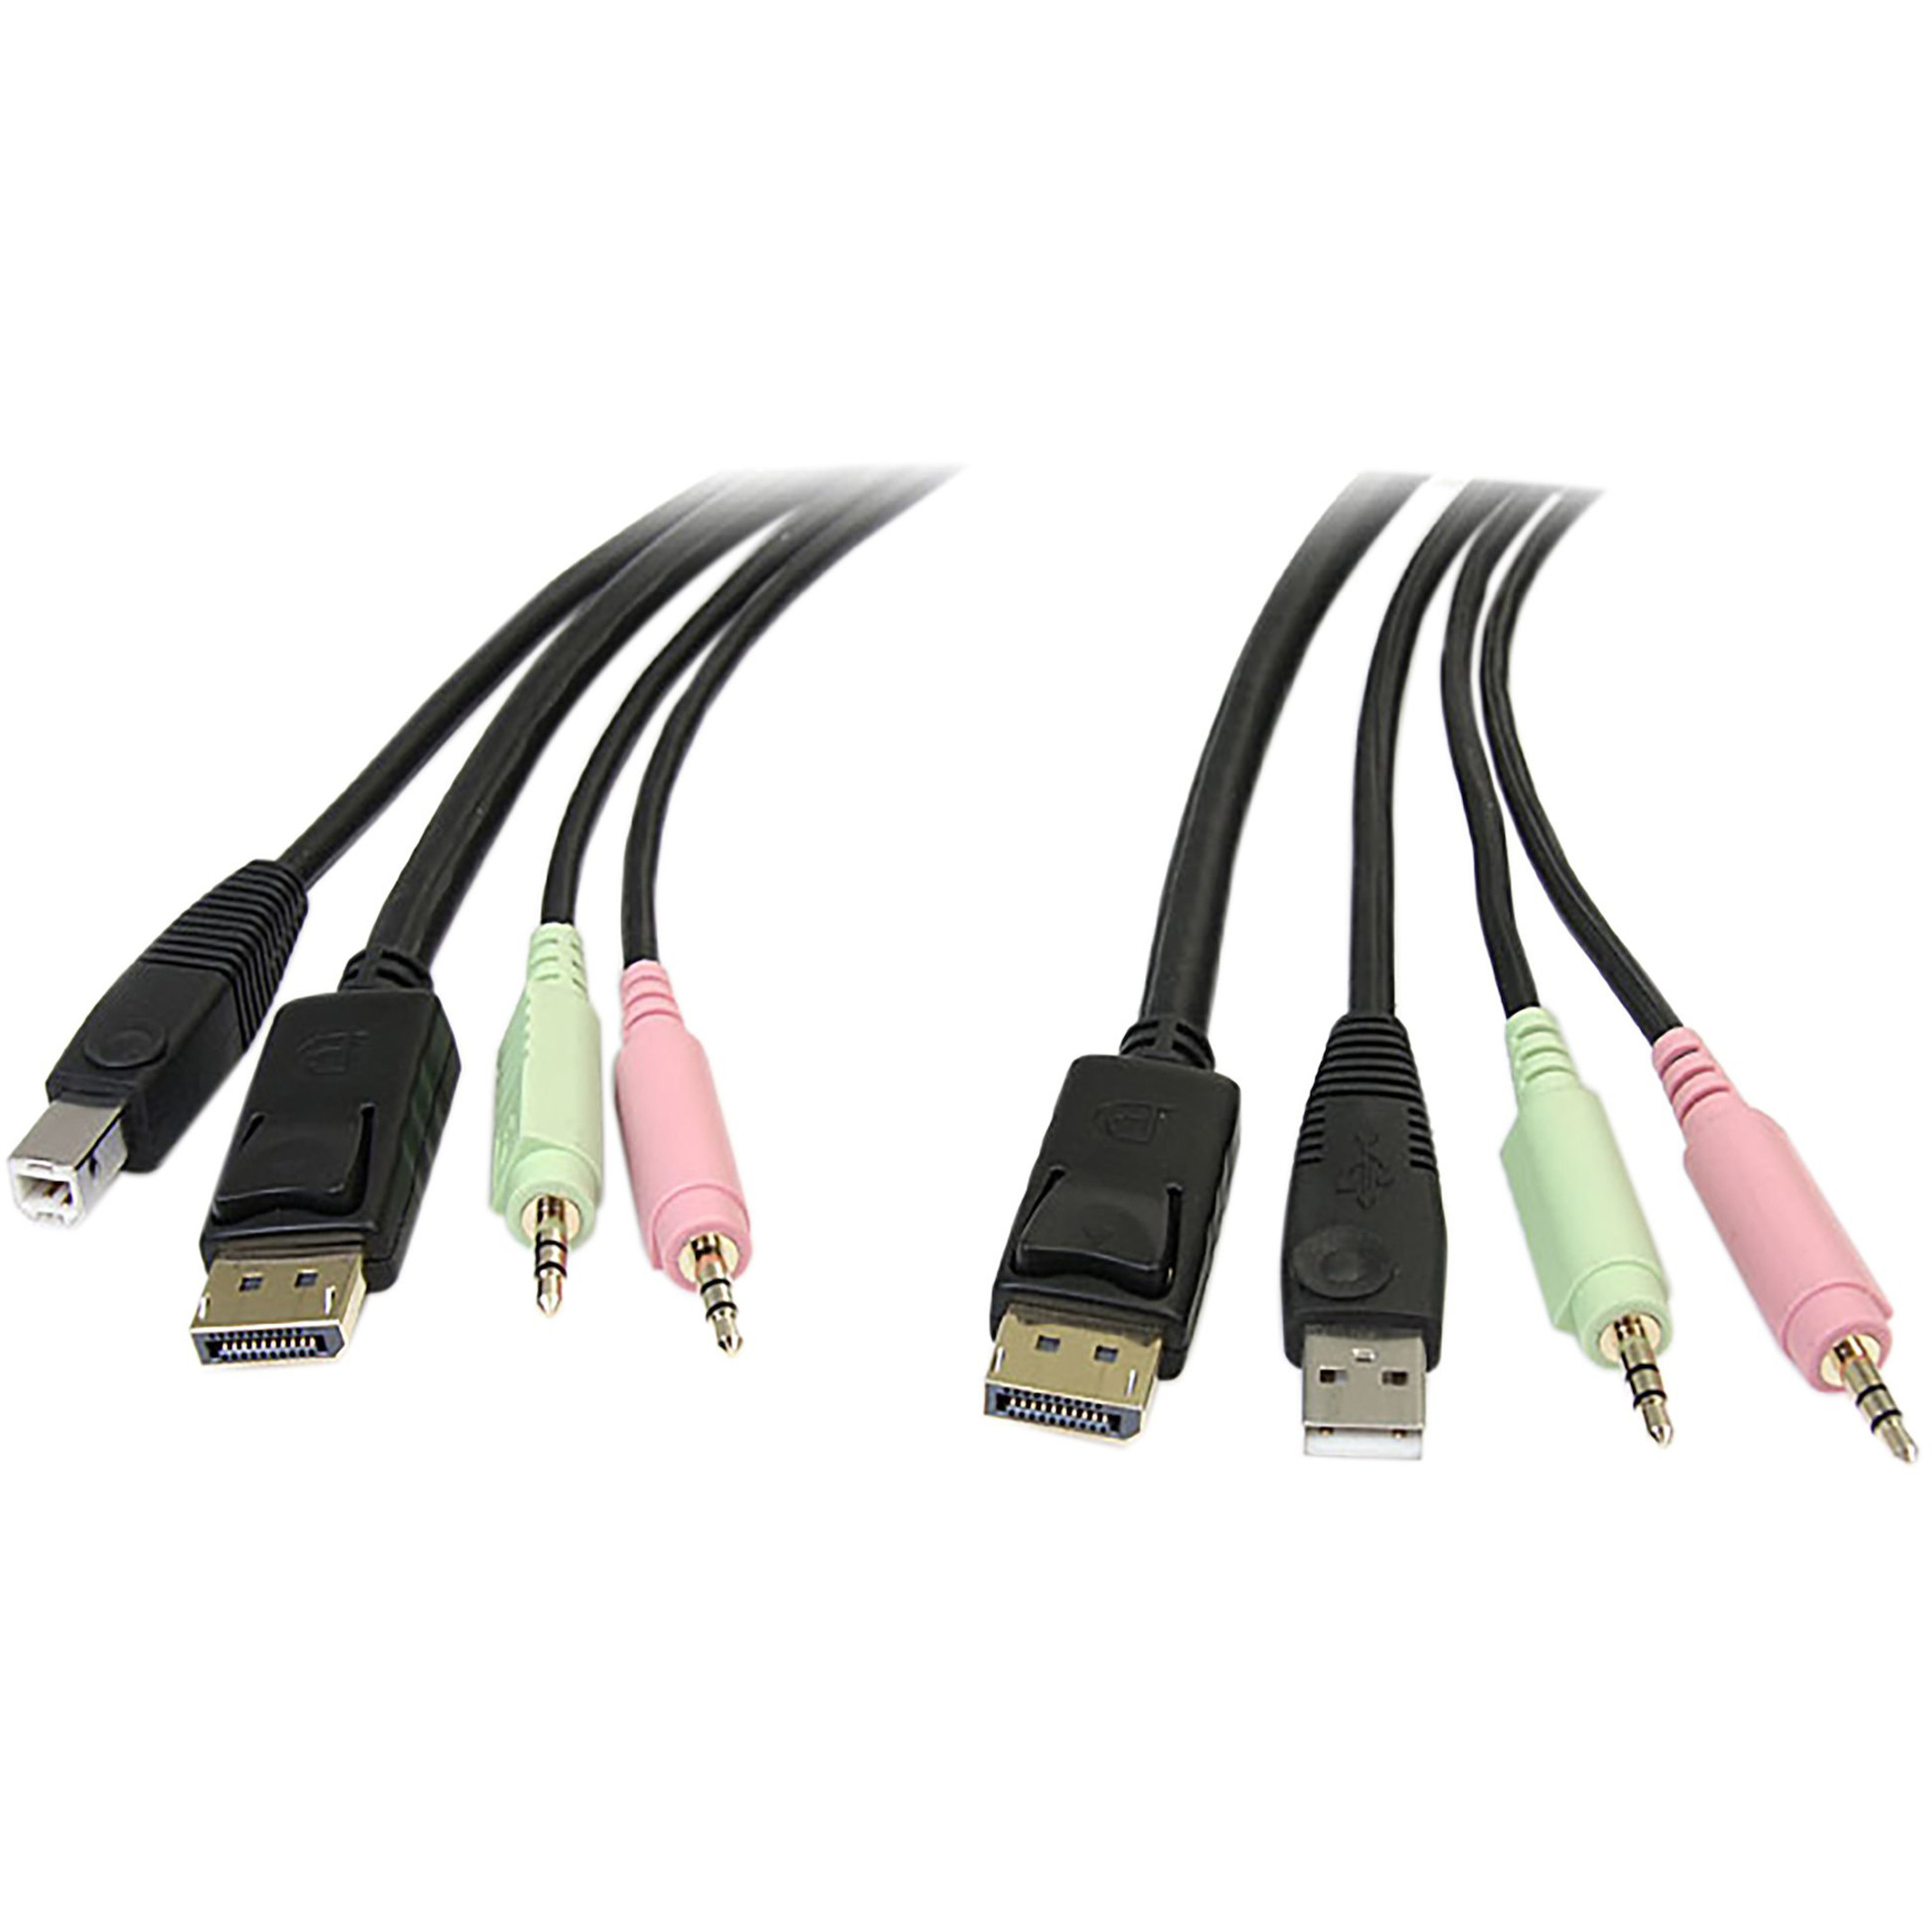 Startech .com 6 ft 4-in-1 USB DisplayPort KVM Switch CableDisplayPort Male Digital Audio/Video DP4N1USB6